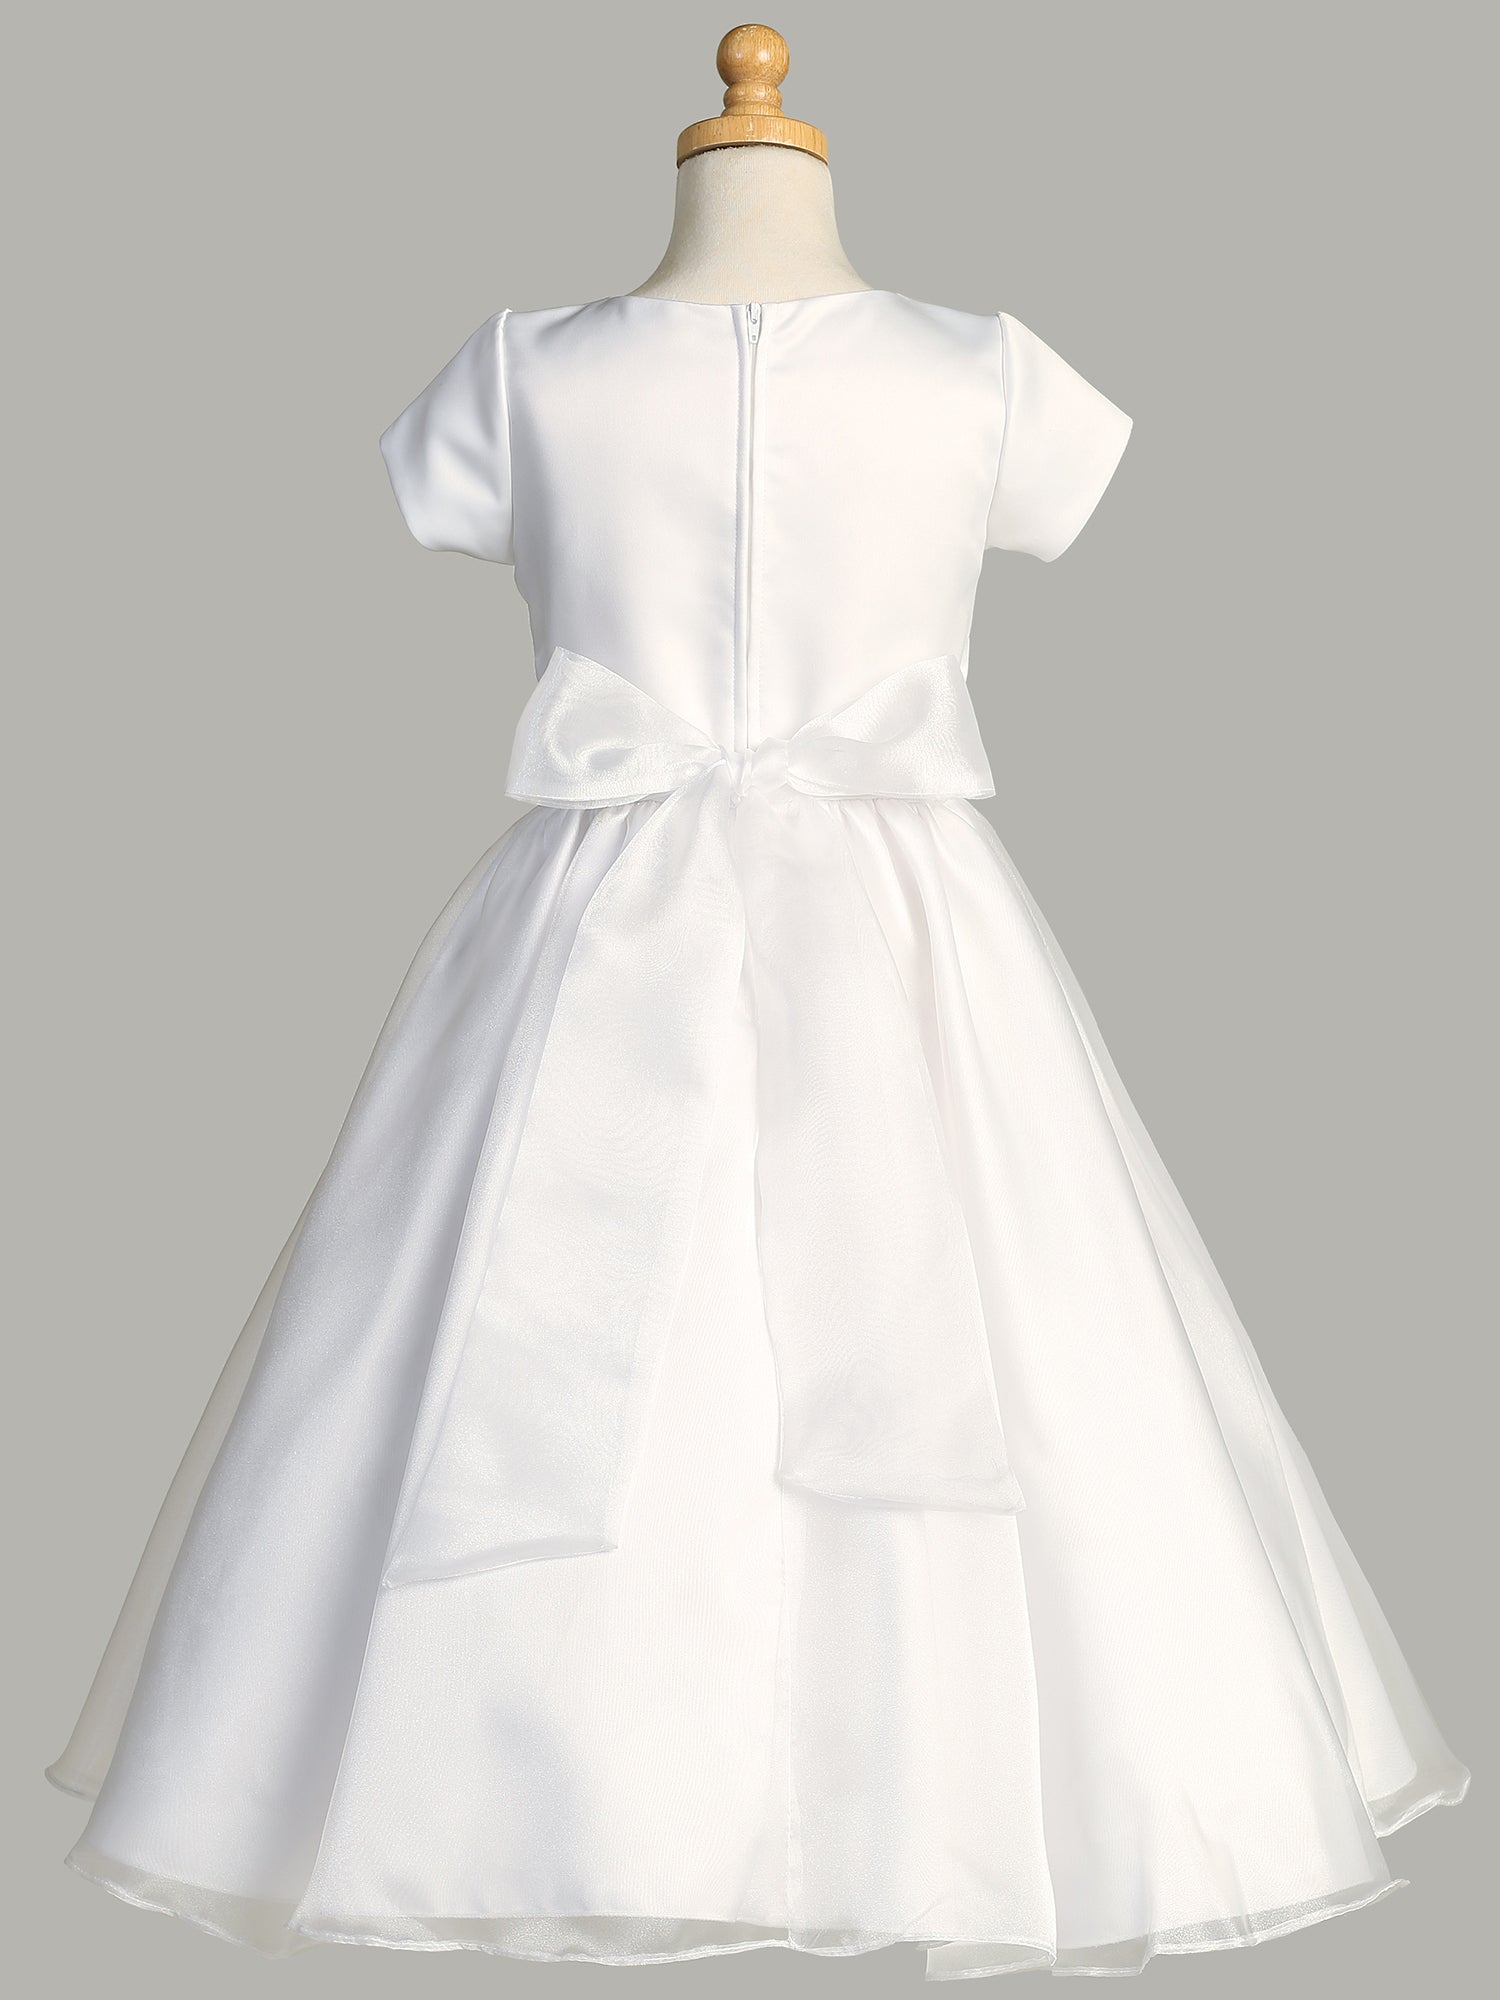 Royal Steps Embellished Communion Gown | Flower girl dresses, First  communion dresses, Flower girl gown